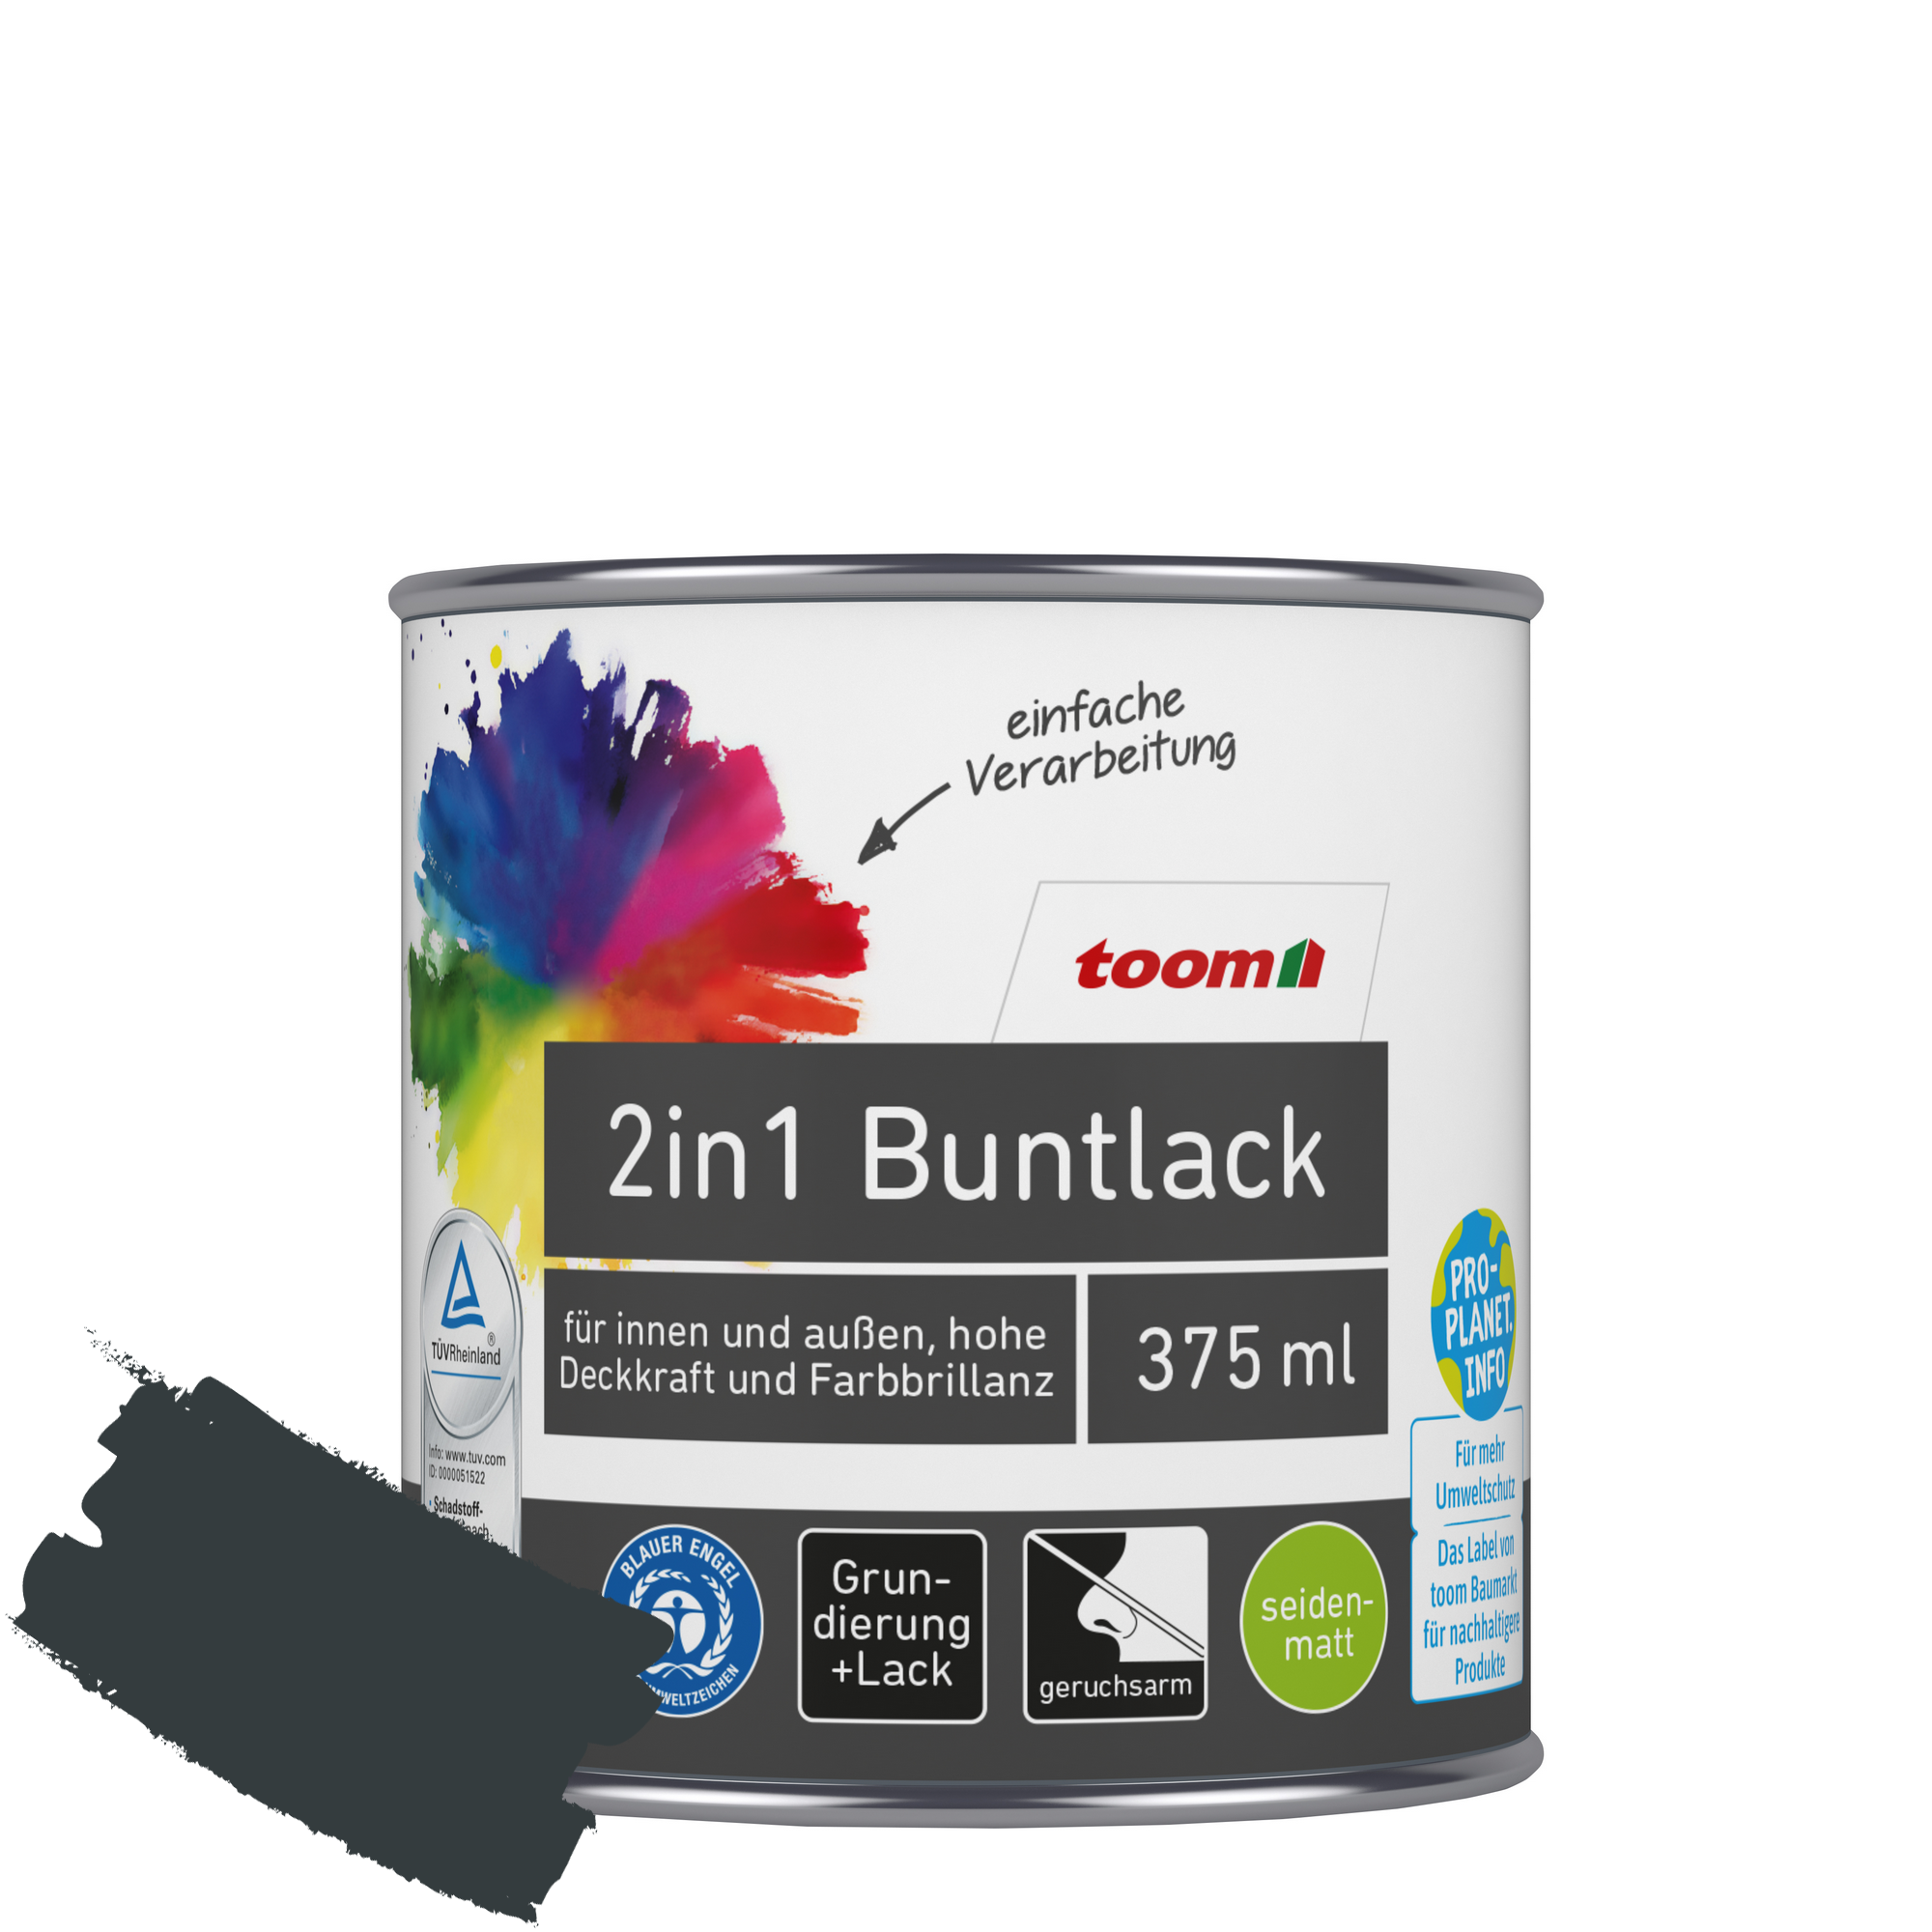 2in1 Buntlack 'Schattenspiel' anthrazitfarben seidenmatt 375 ml + product picture